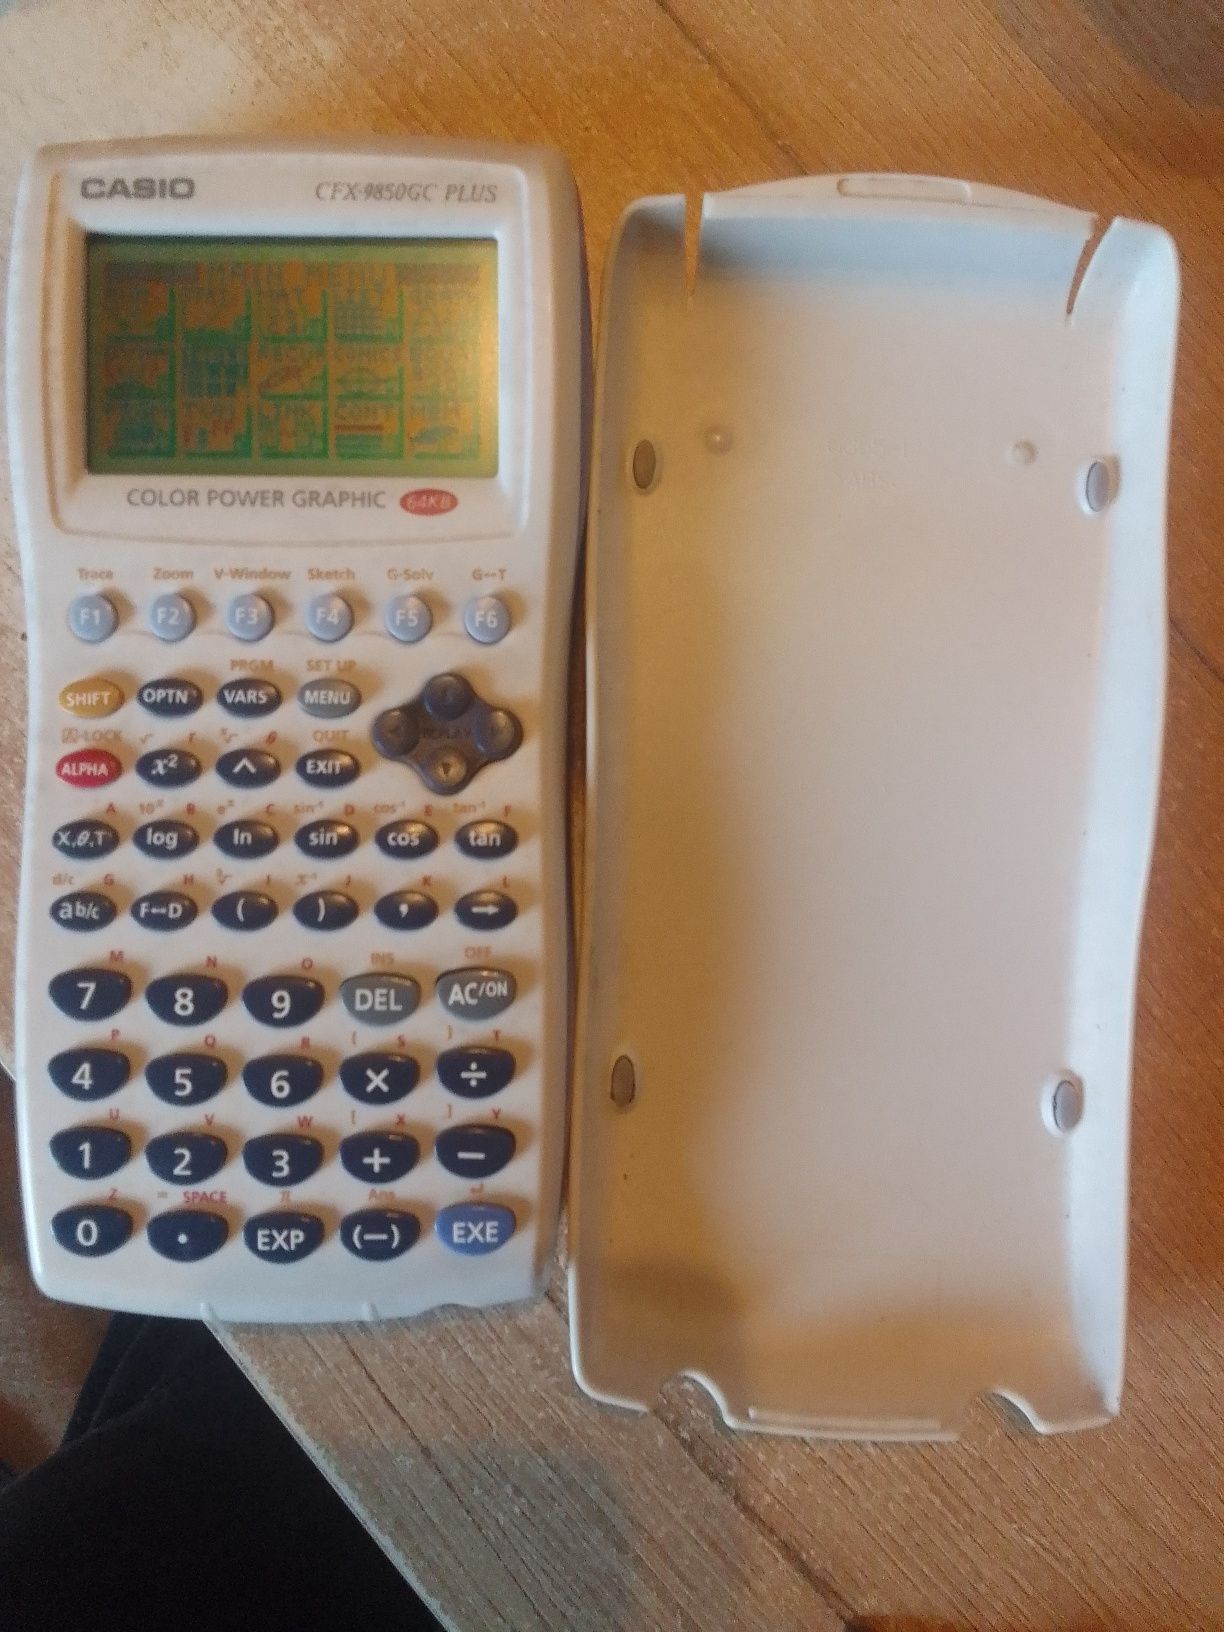 Kalkulator naukowy Casio model cfx-9850gc PLUS